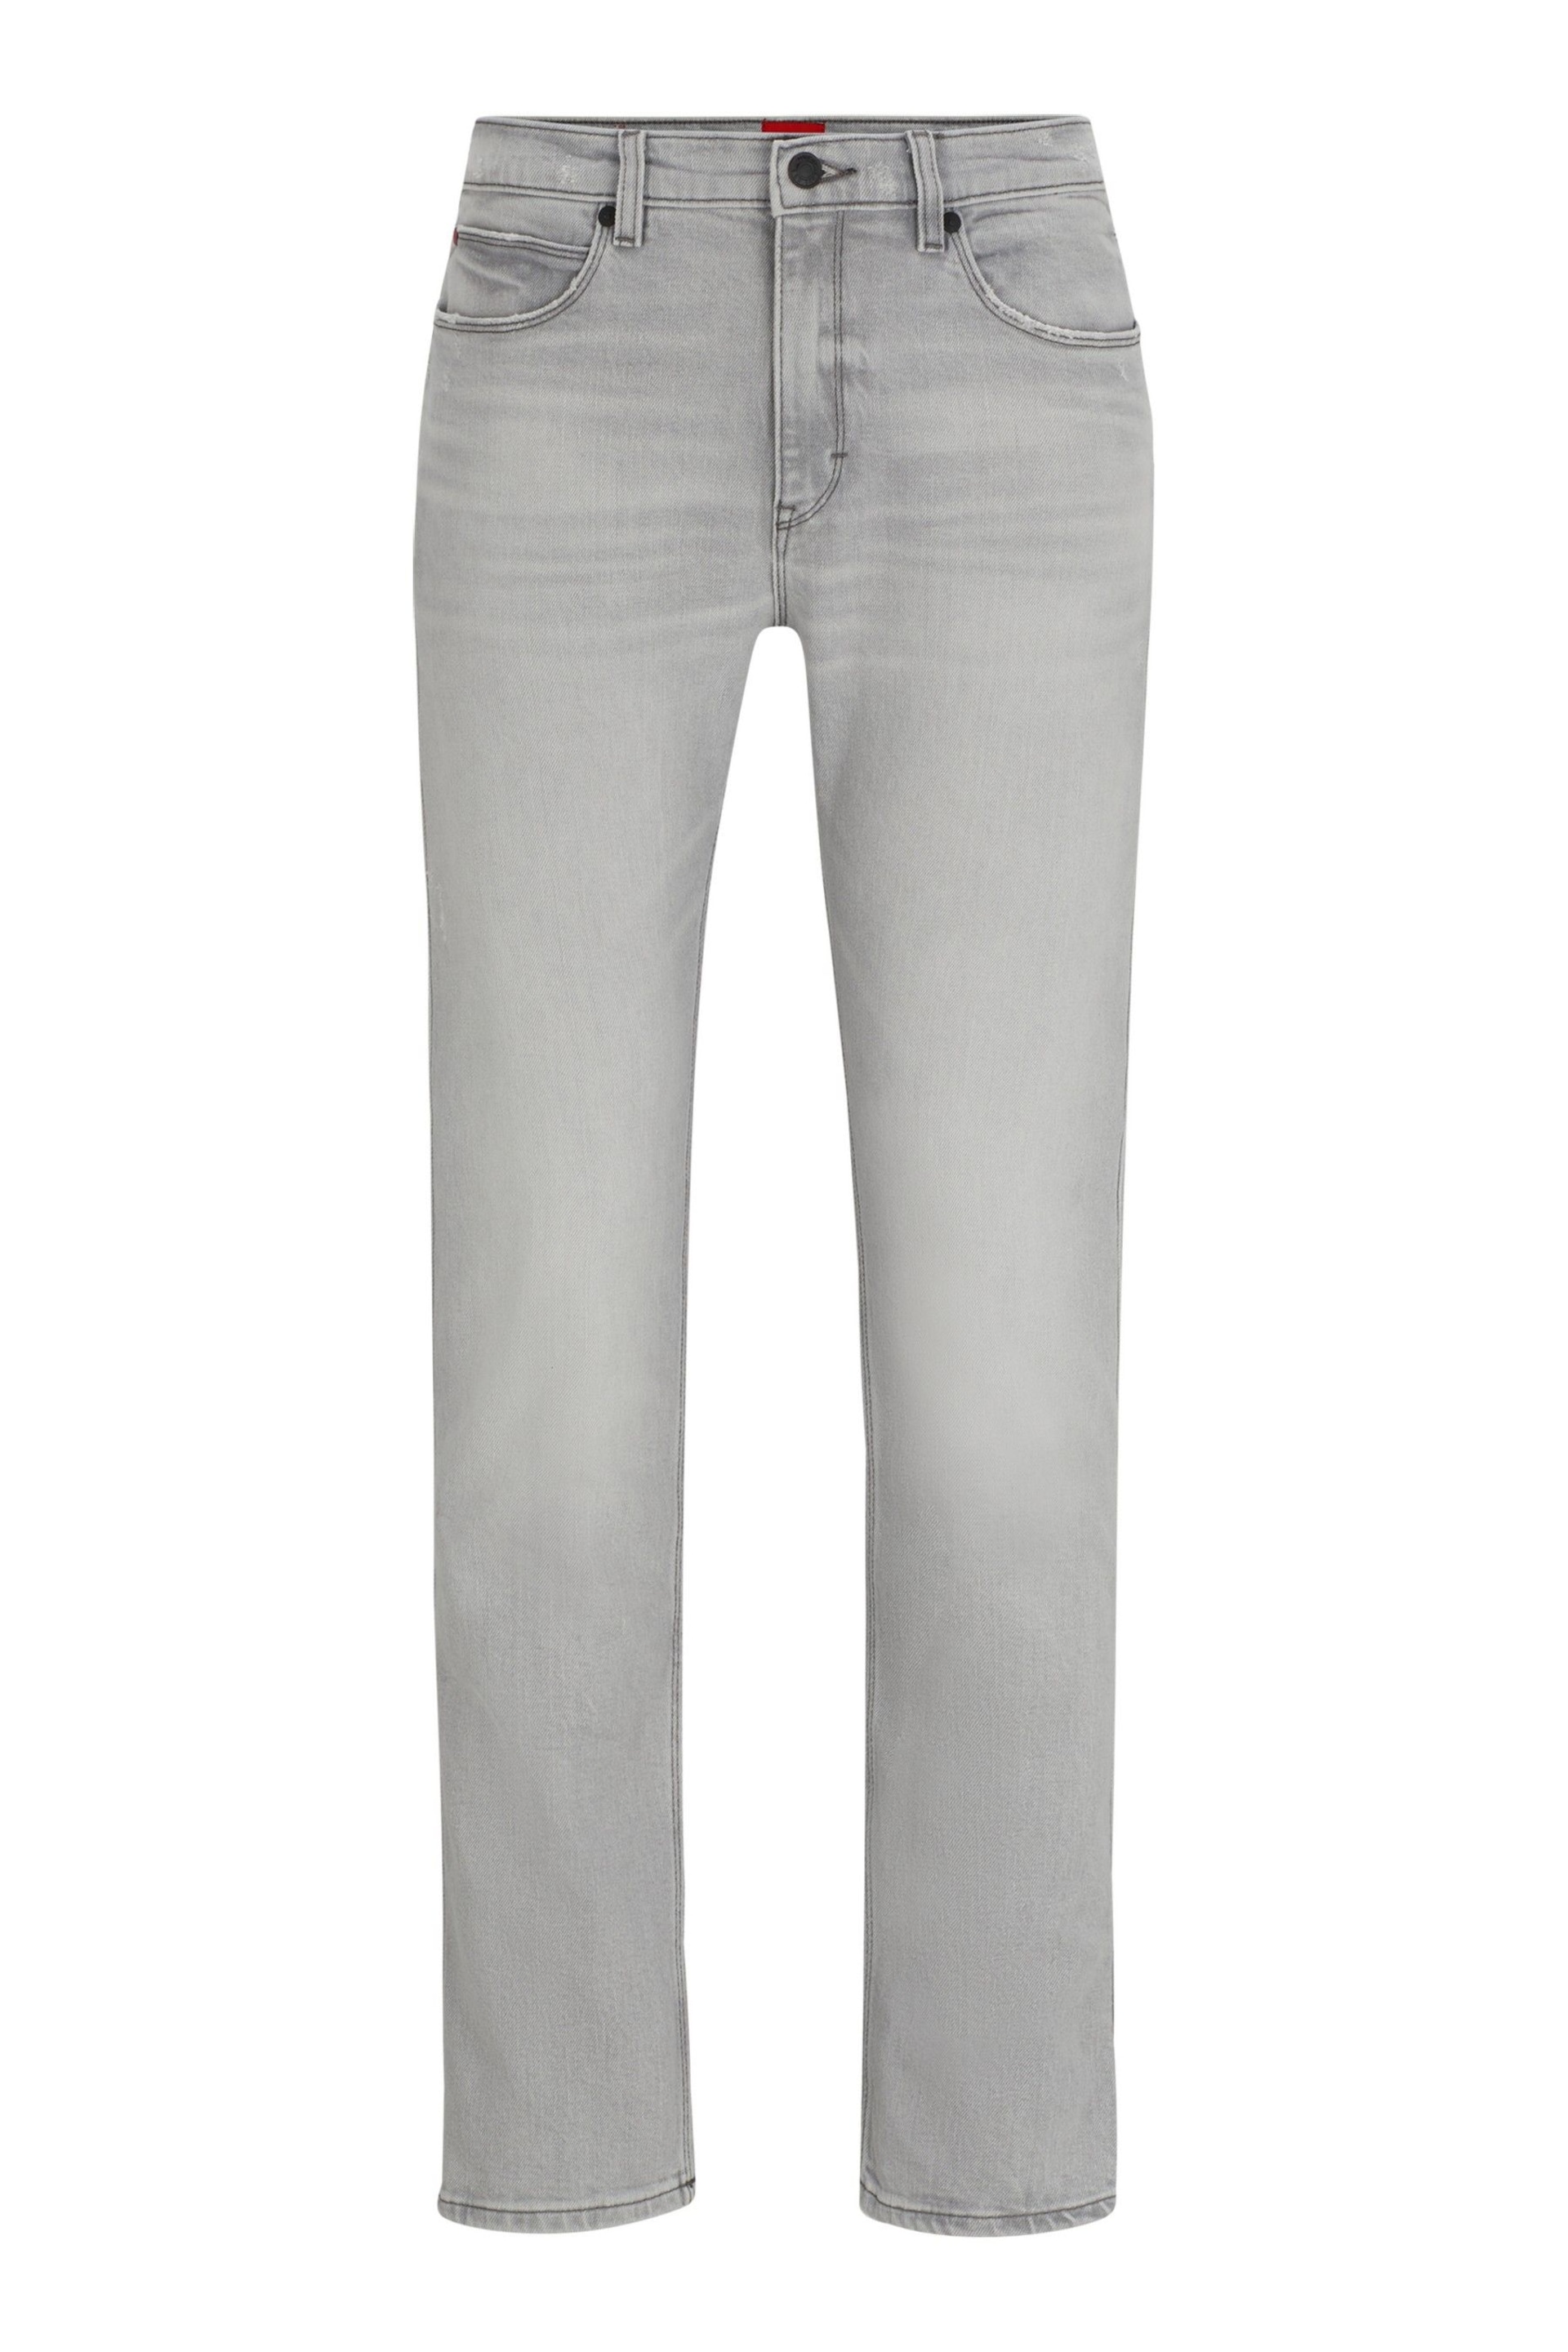 HUGO Grey Slim-Fit Jeans in Light-Grey Denim - Image 5 of 5